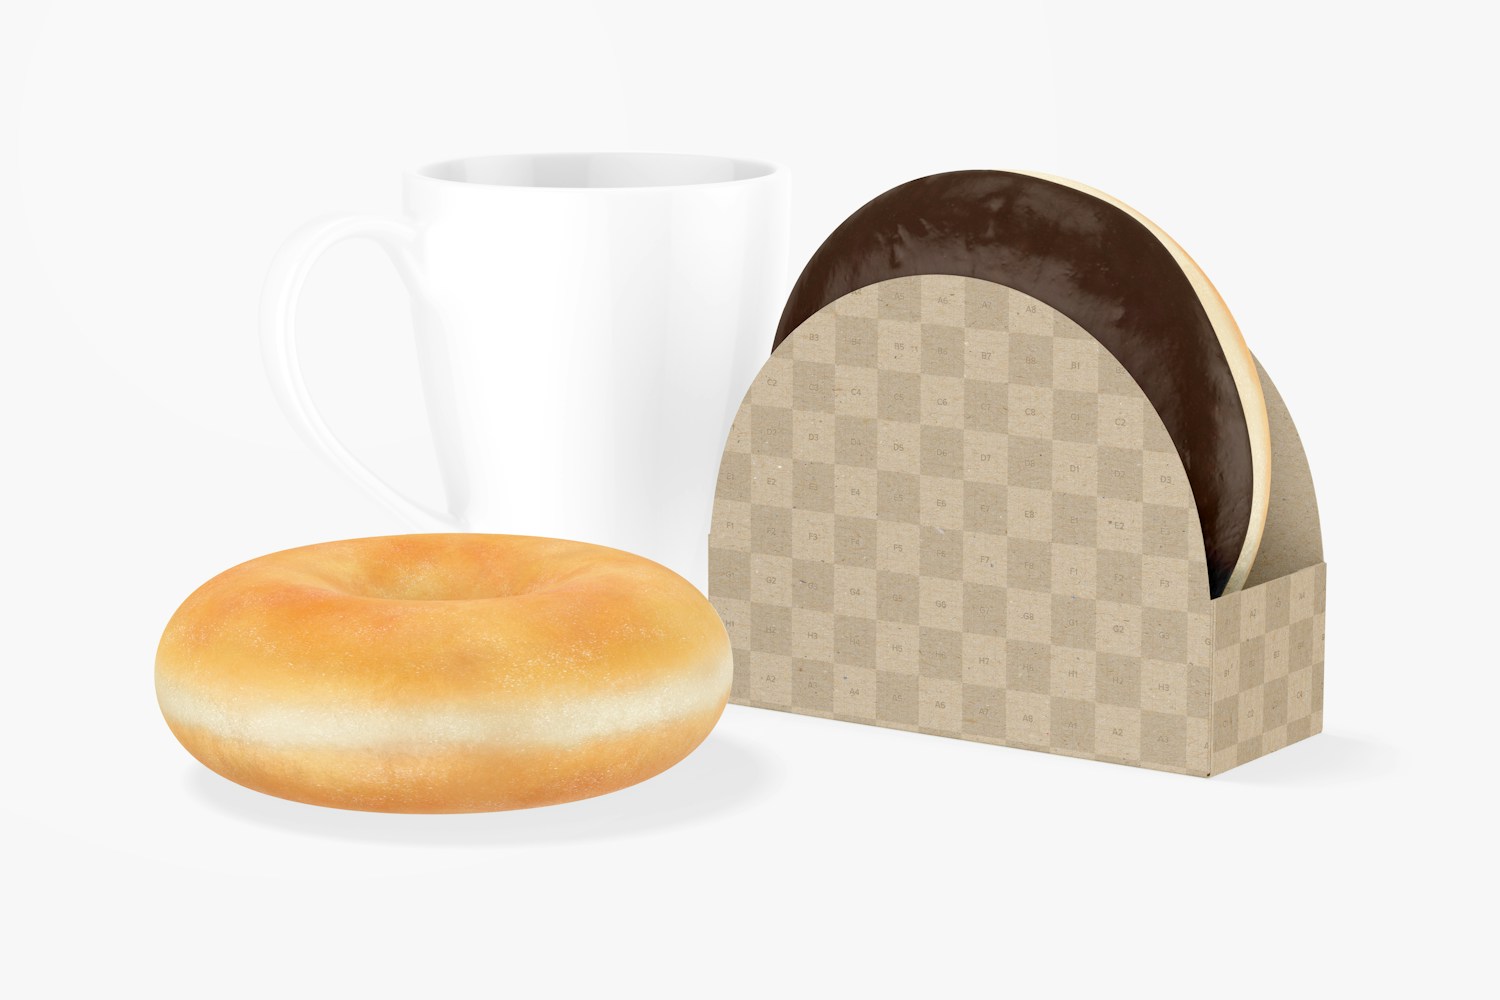 Donut Box Mockup, with Mug